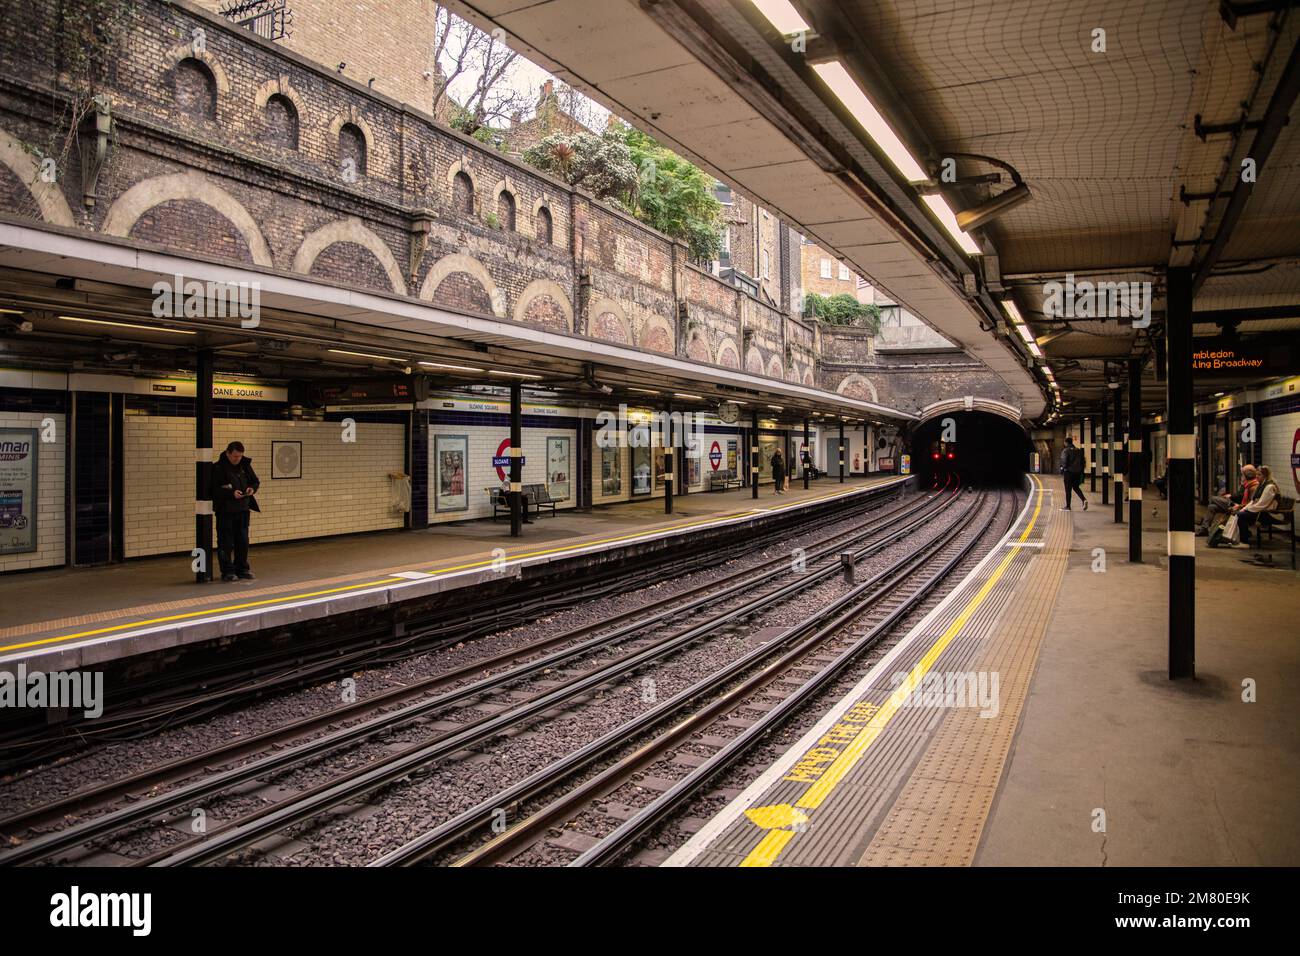 London Underground Sloane Square station, run by Tfl (Transport for London) Stock Photo